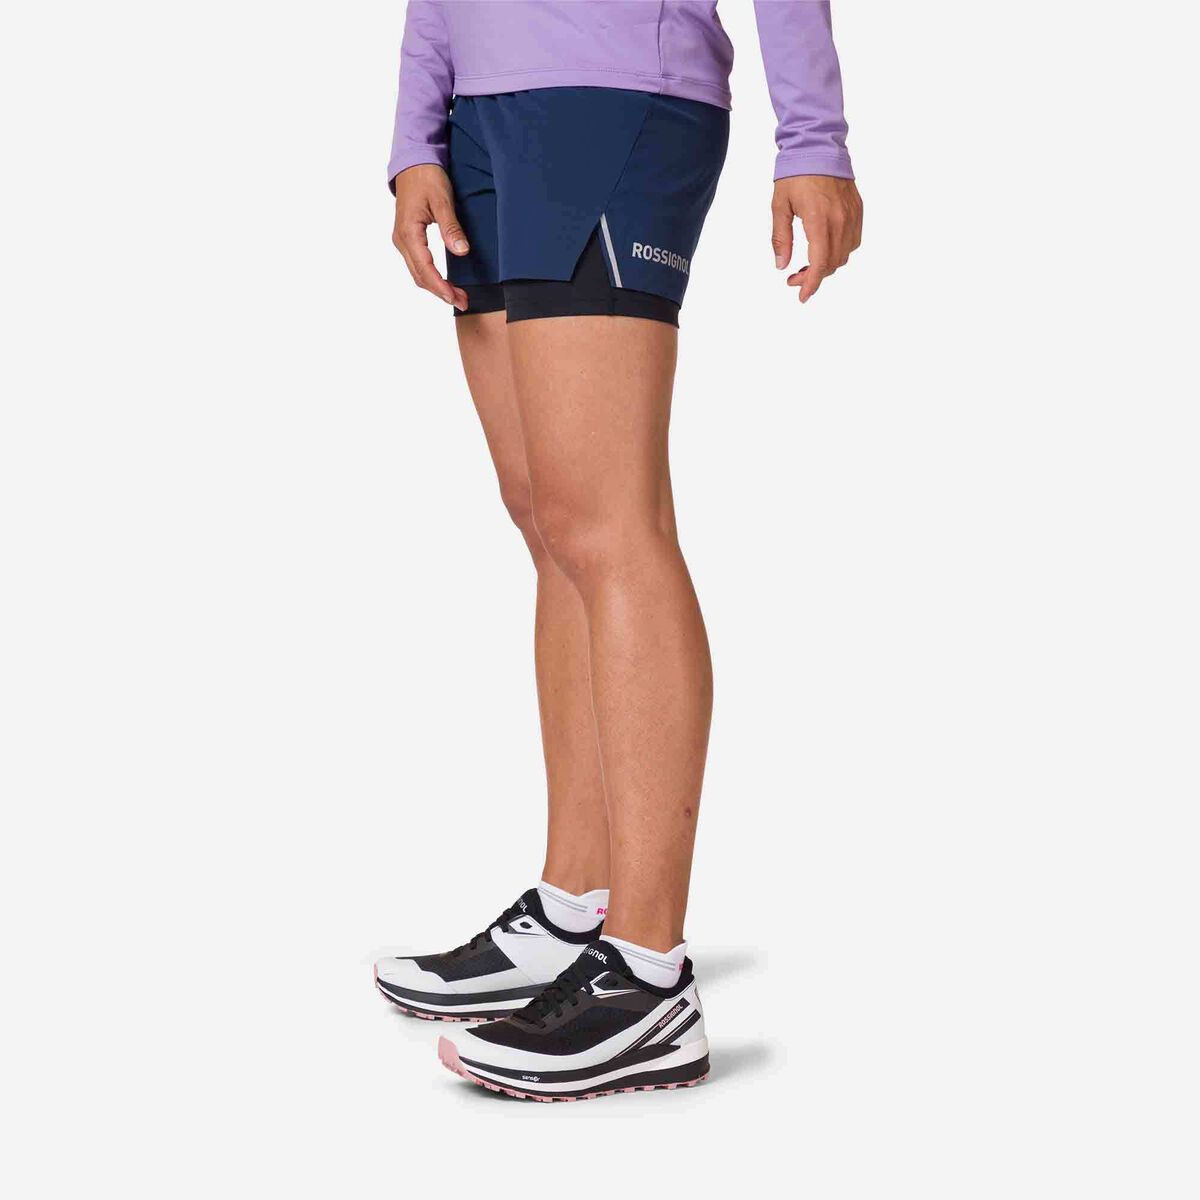 Rossignol Women's trail running shorts Blue